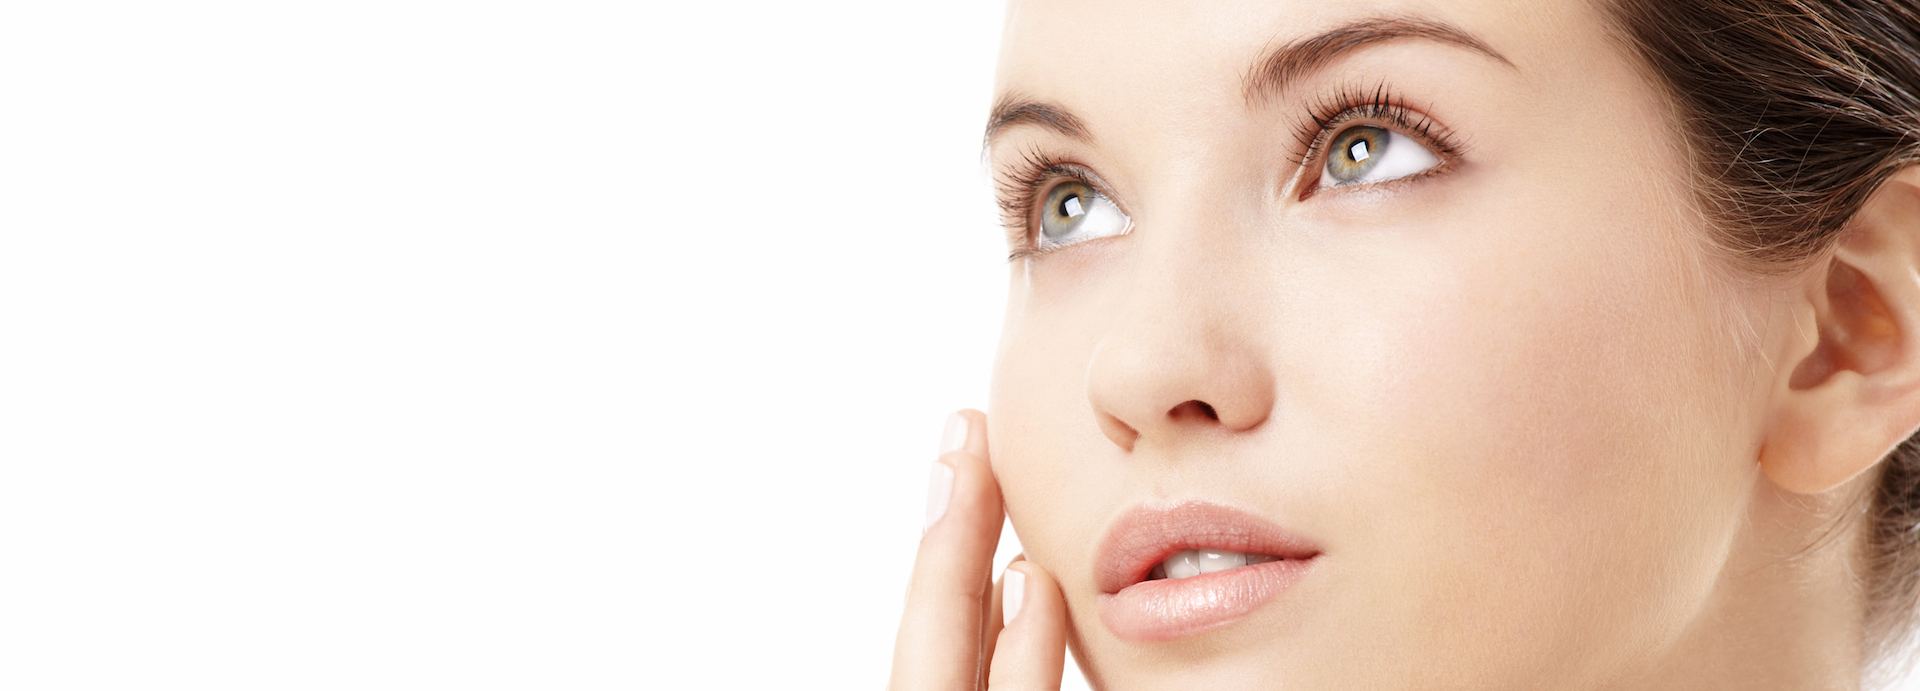 Customized Skin Care - SkinCeuticals